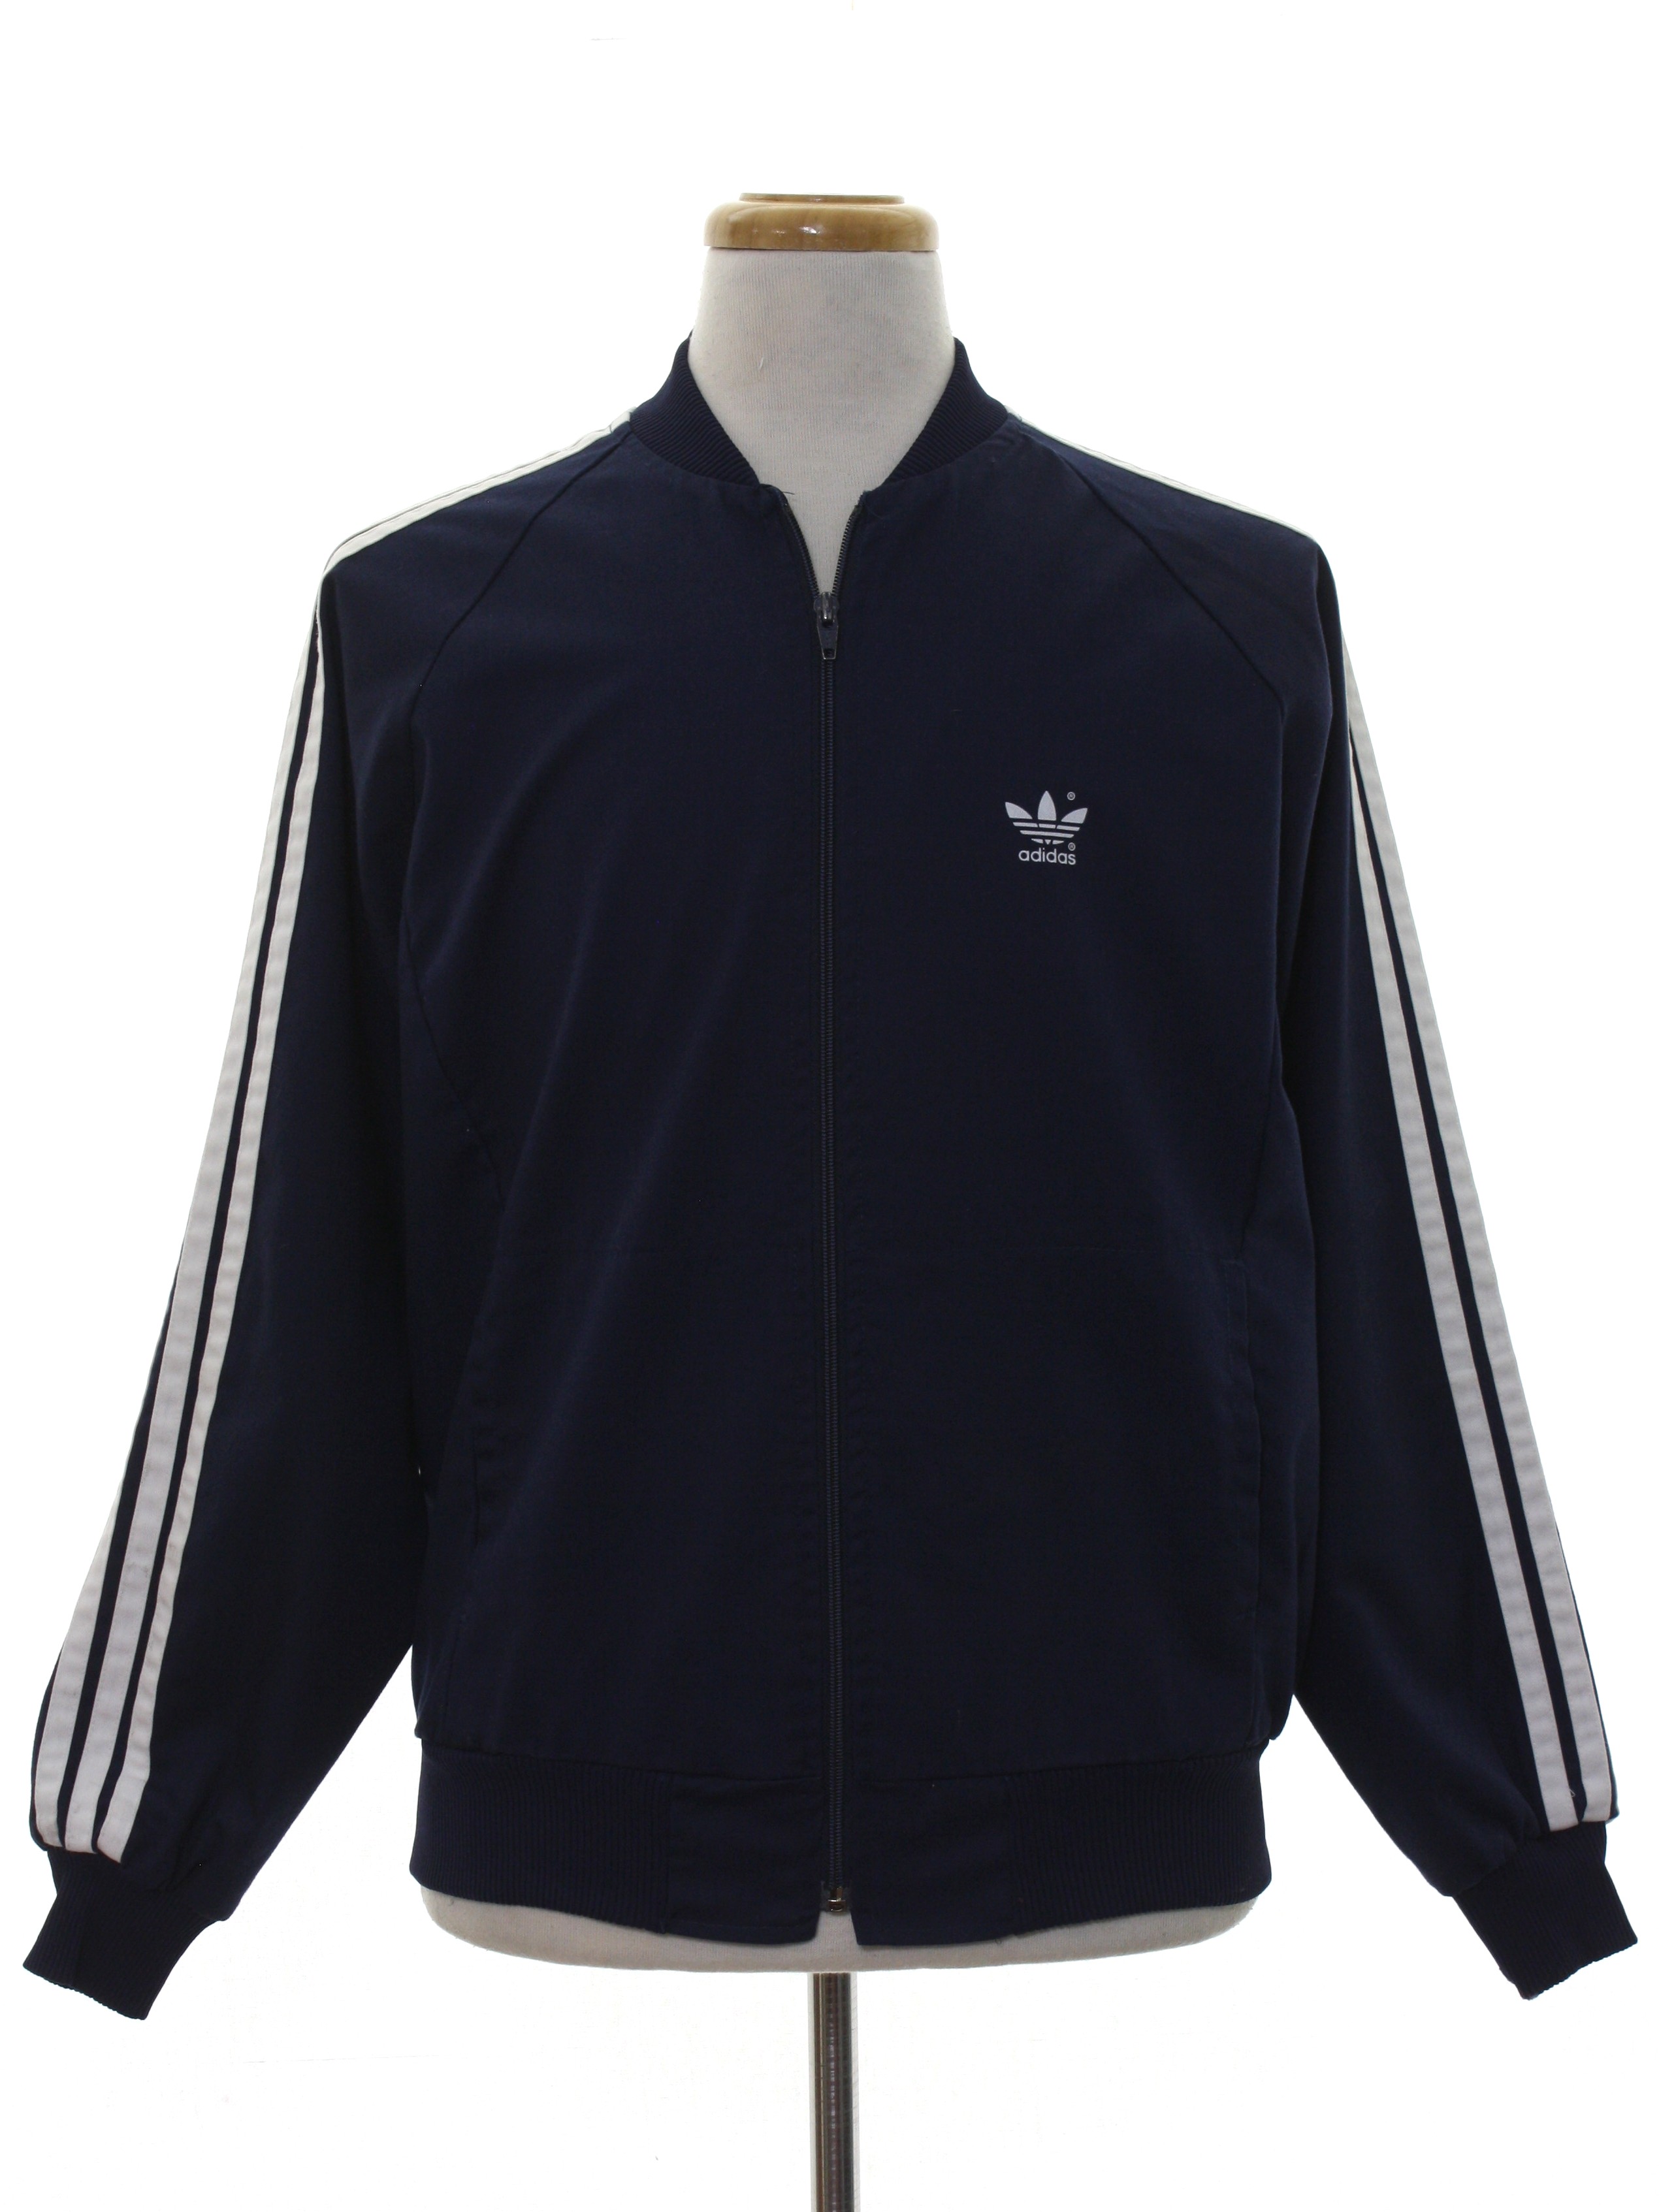 Retro 1980's Jacket (Adidas) : 80s -Adidas- Mens midnight blue ...